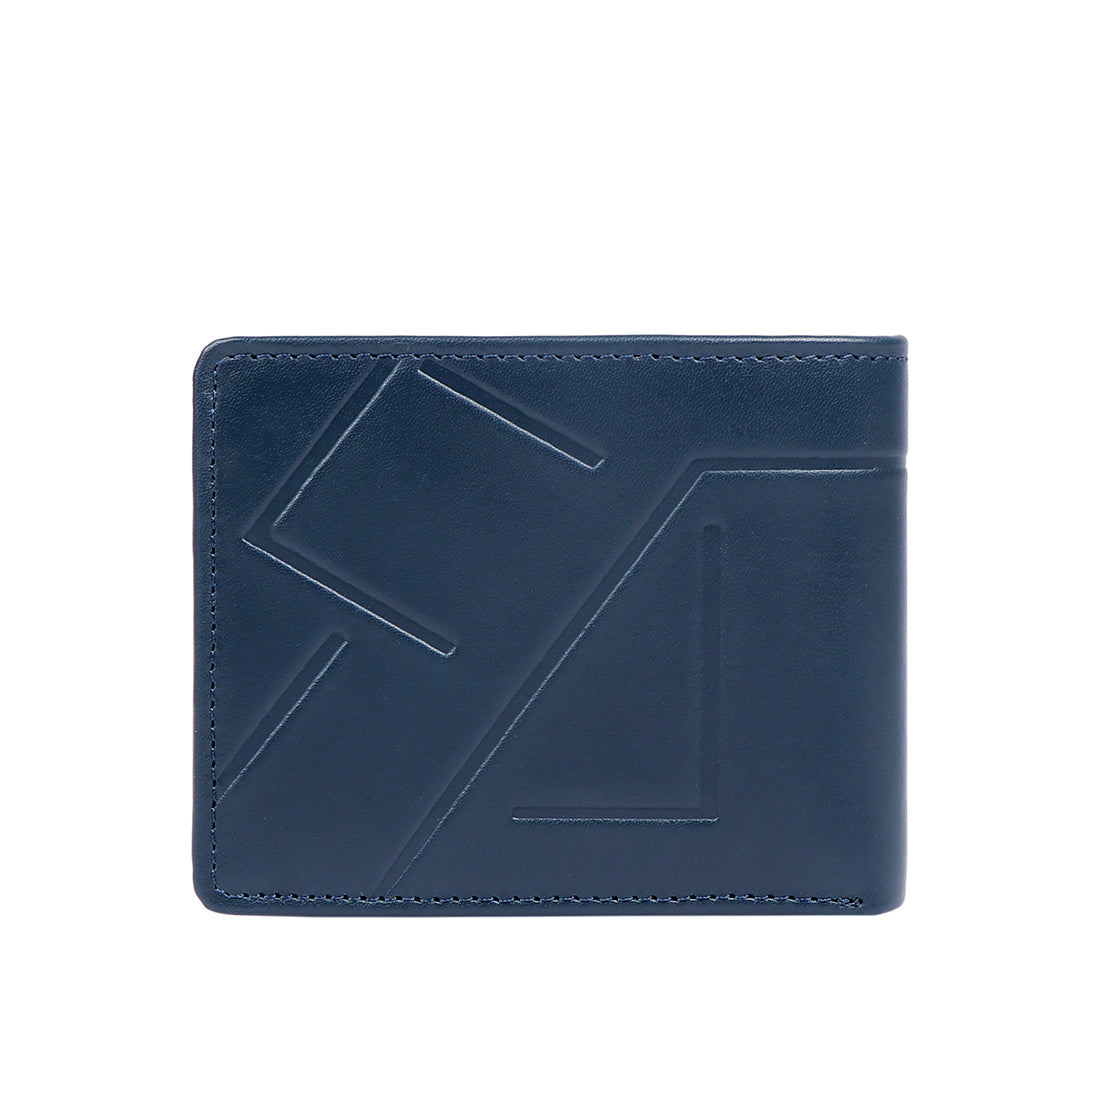 Buy Blue 300-017 Bi-Fold Wallet Online - Hidesign